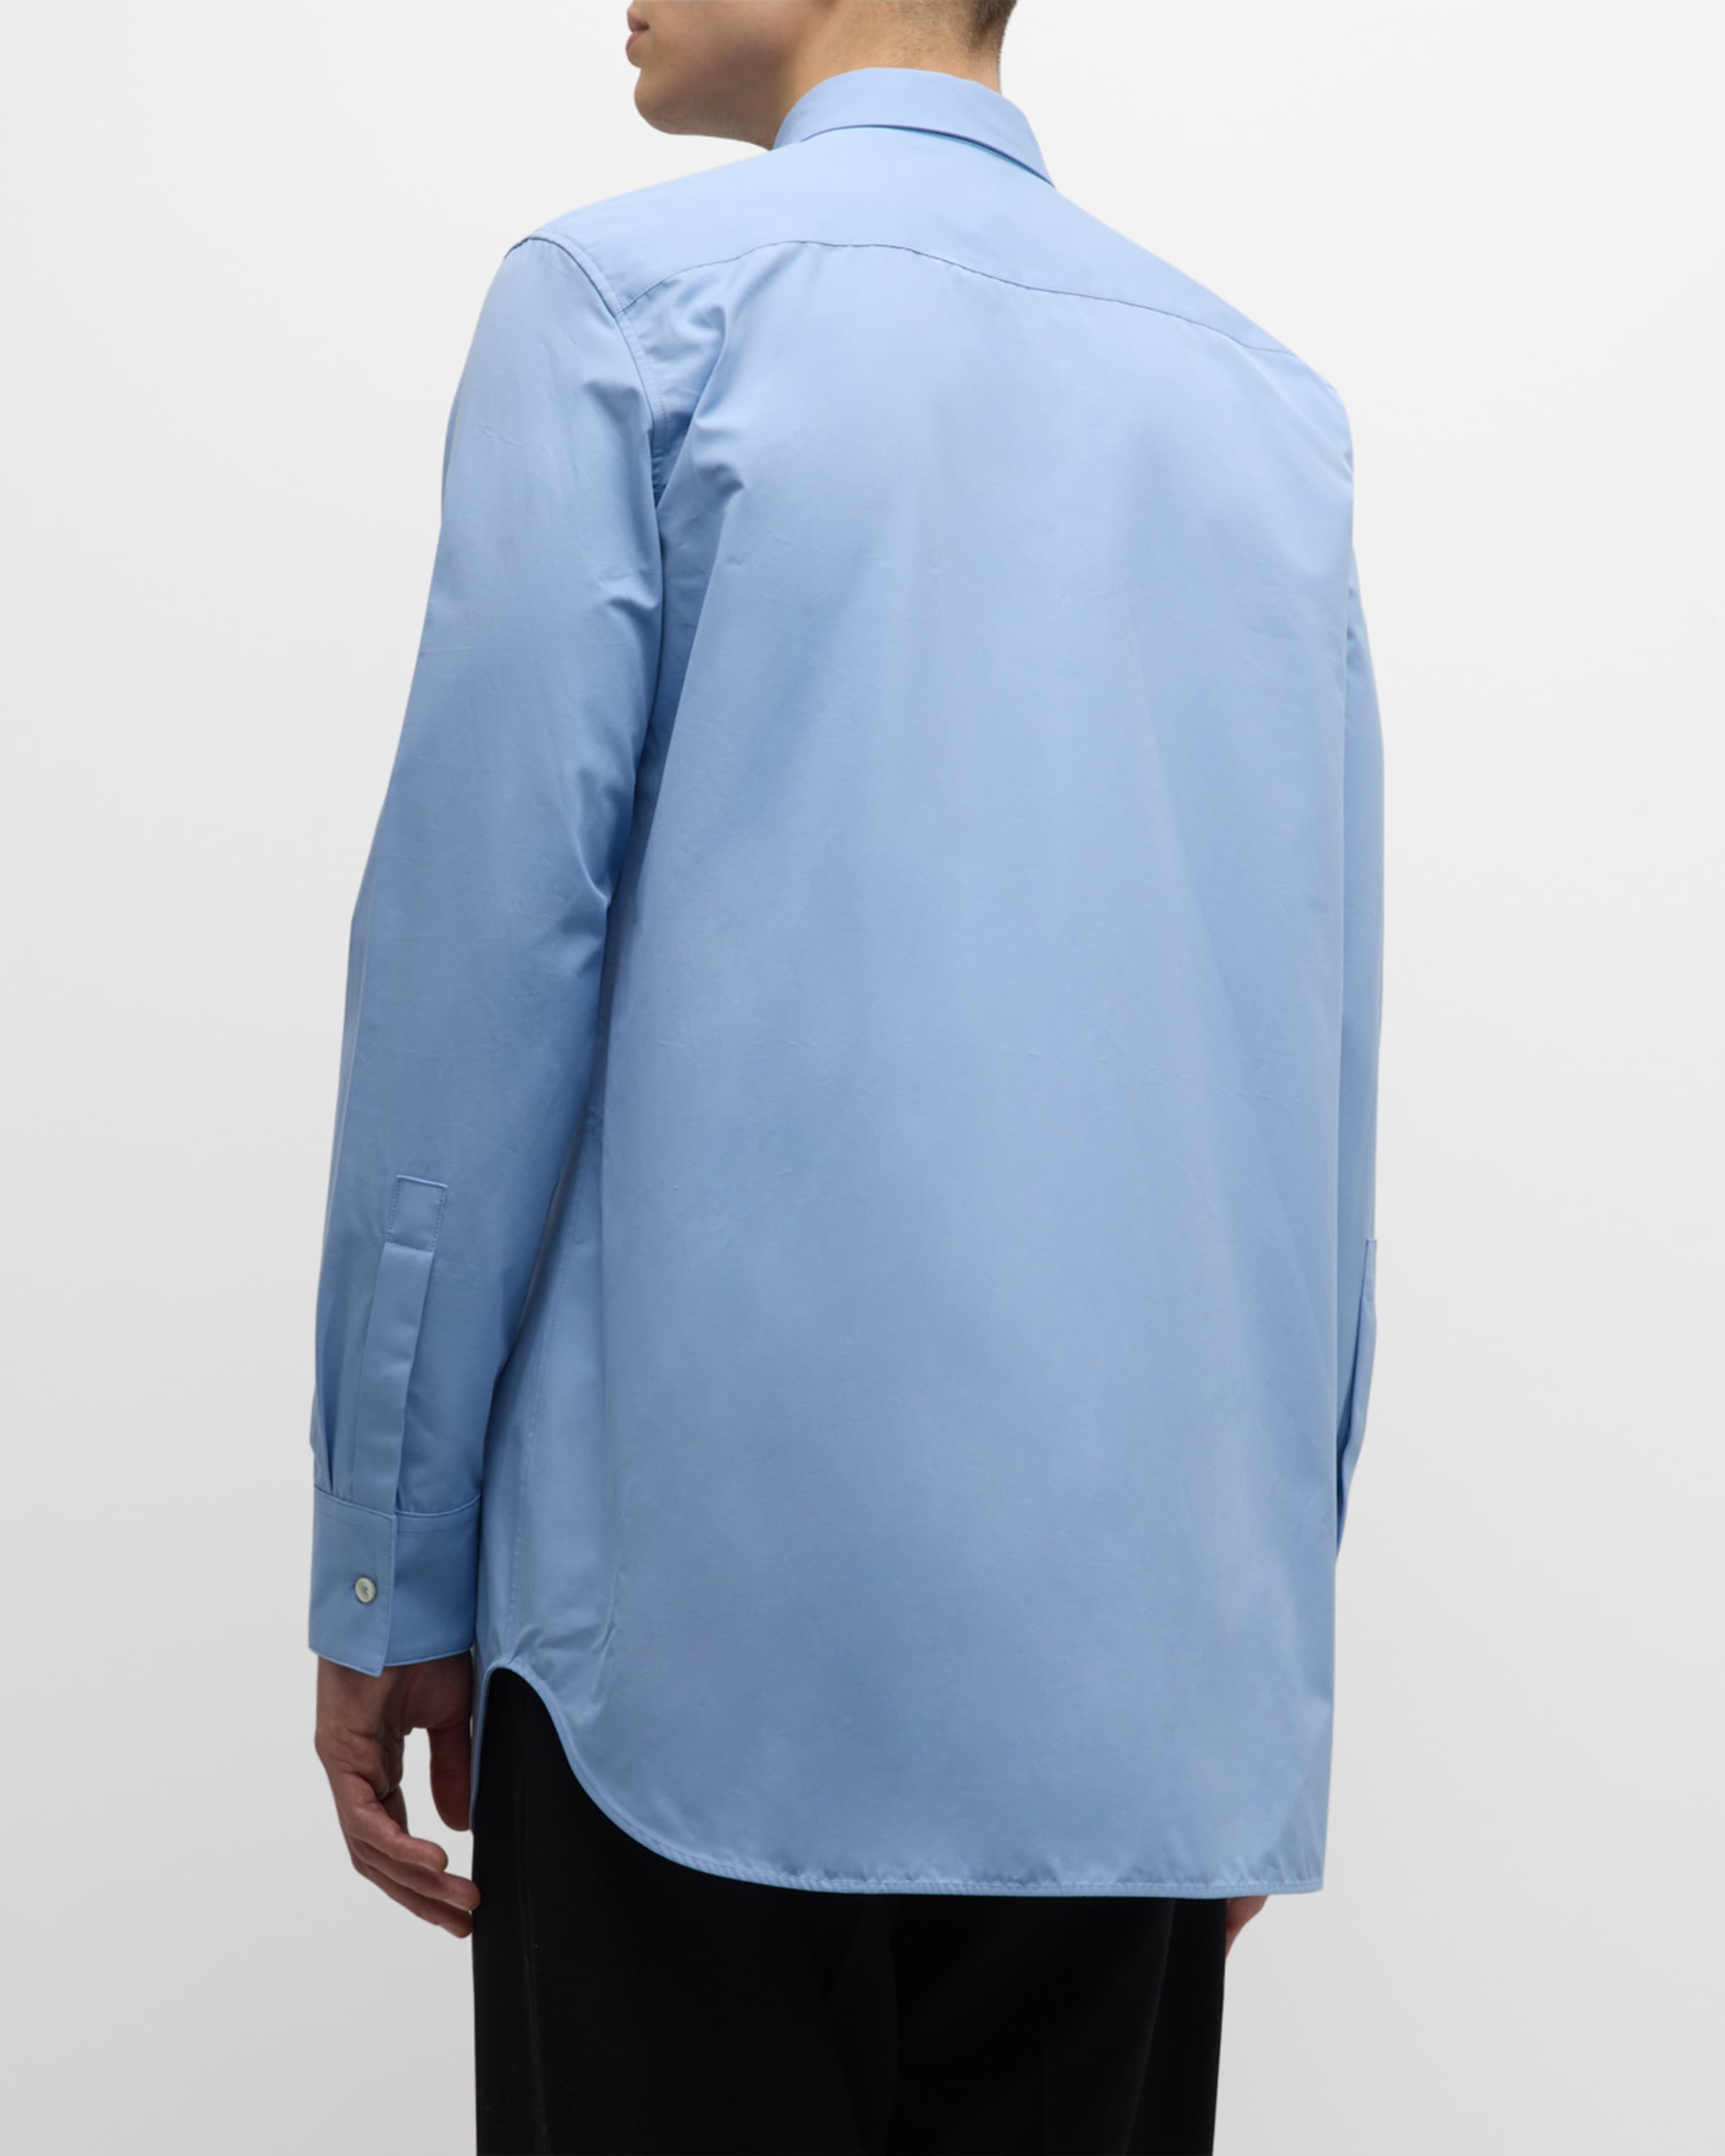 Men's Long Button-Down Solid Shirt - 3